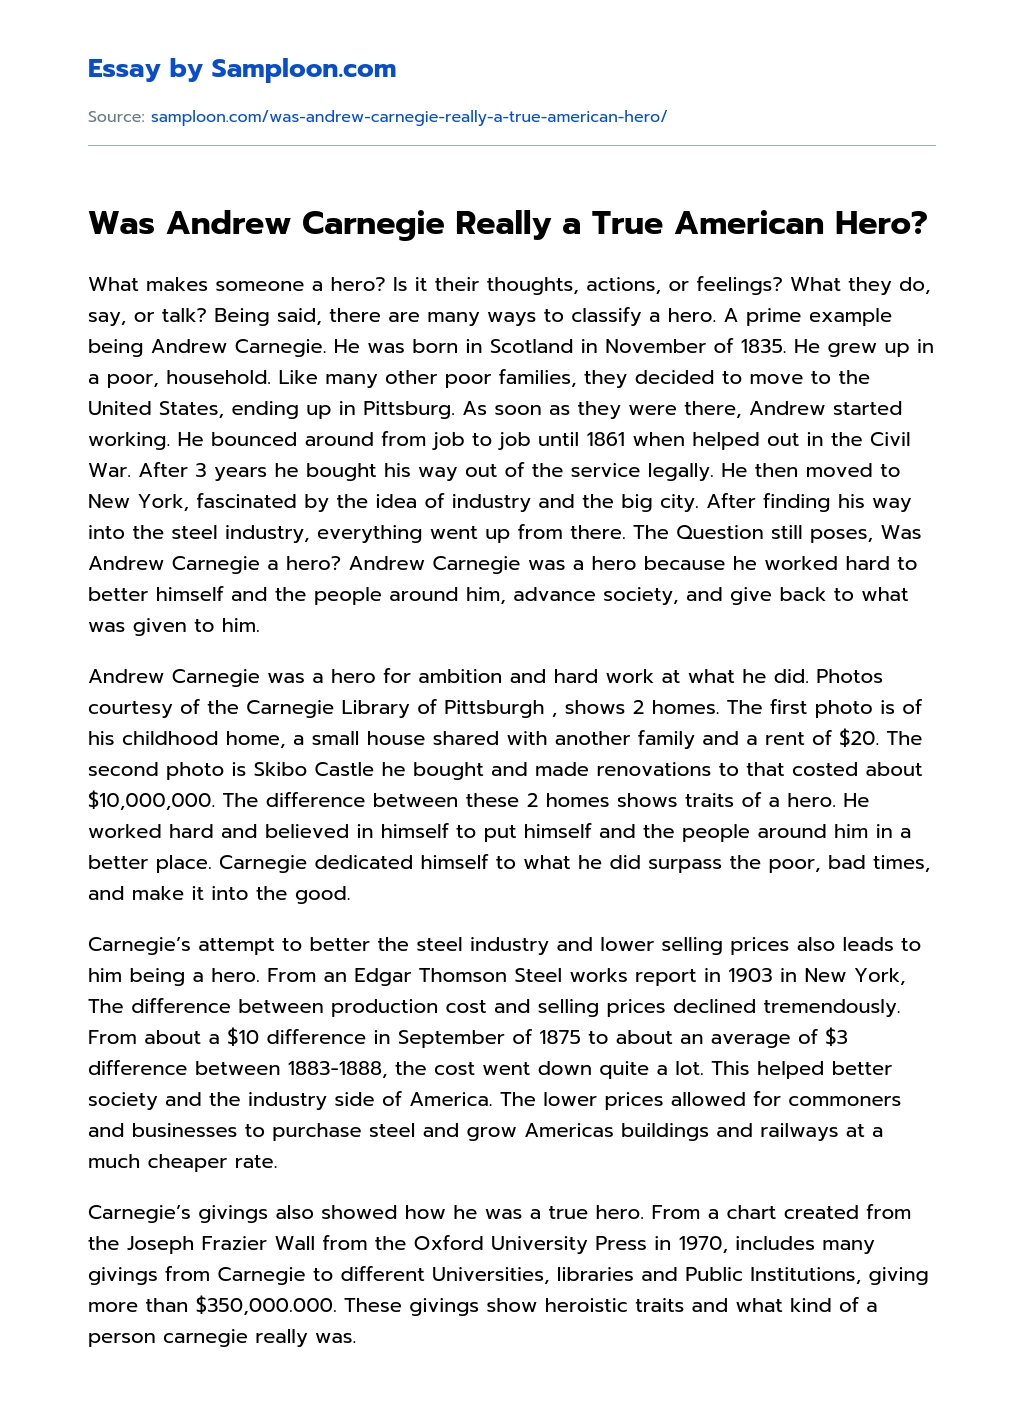 Was Andrew Carnegie Really a True American Hero? essay